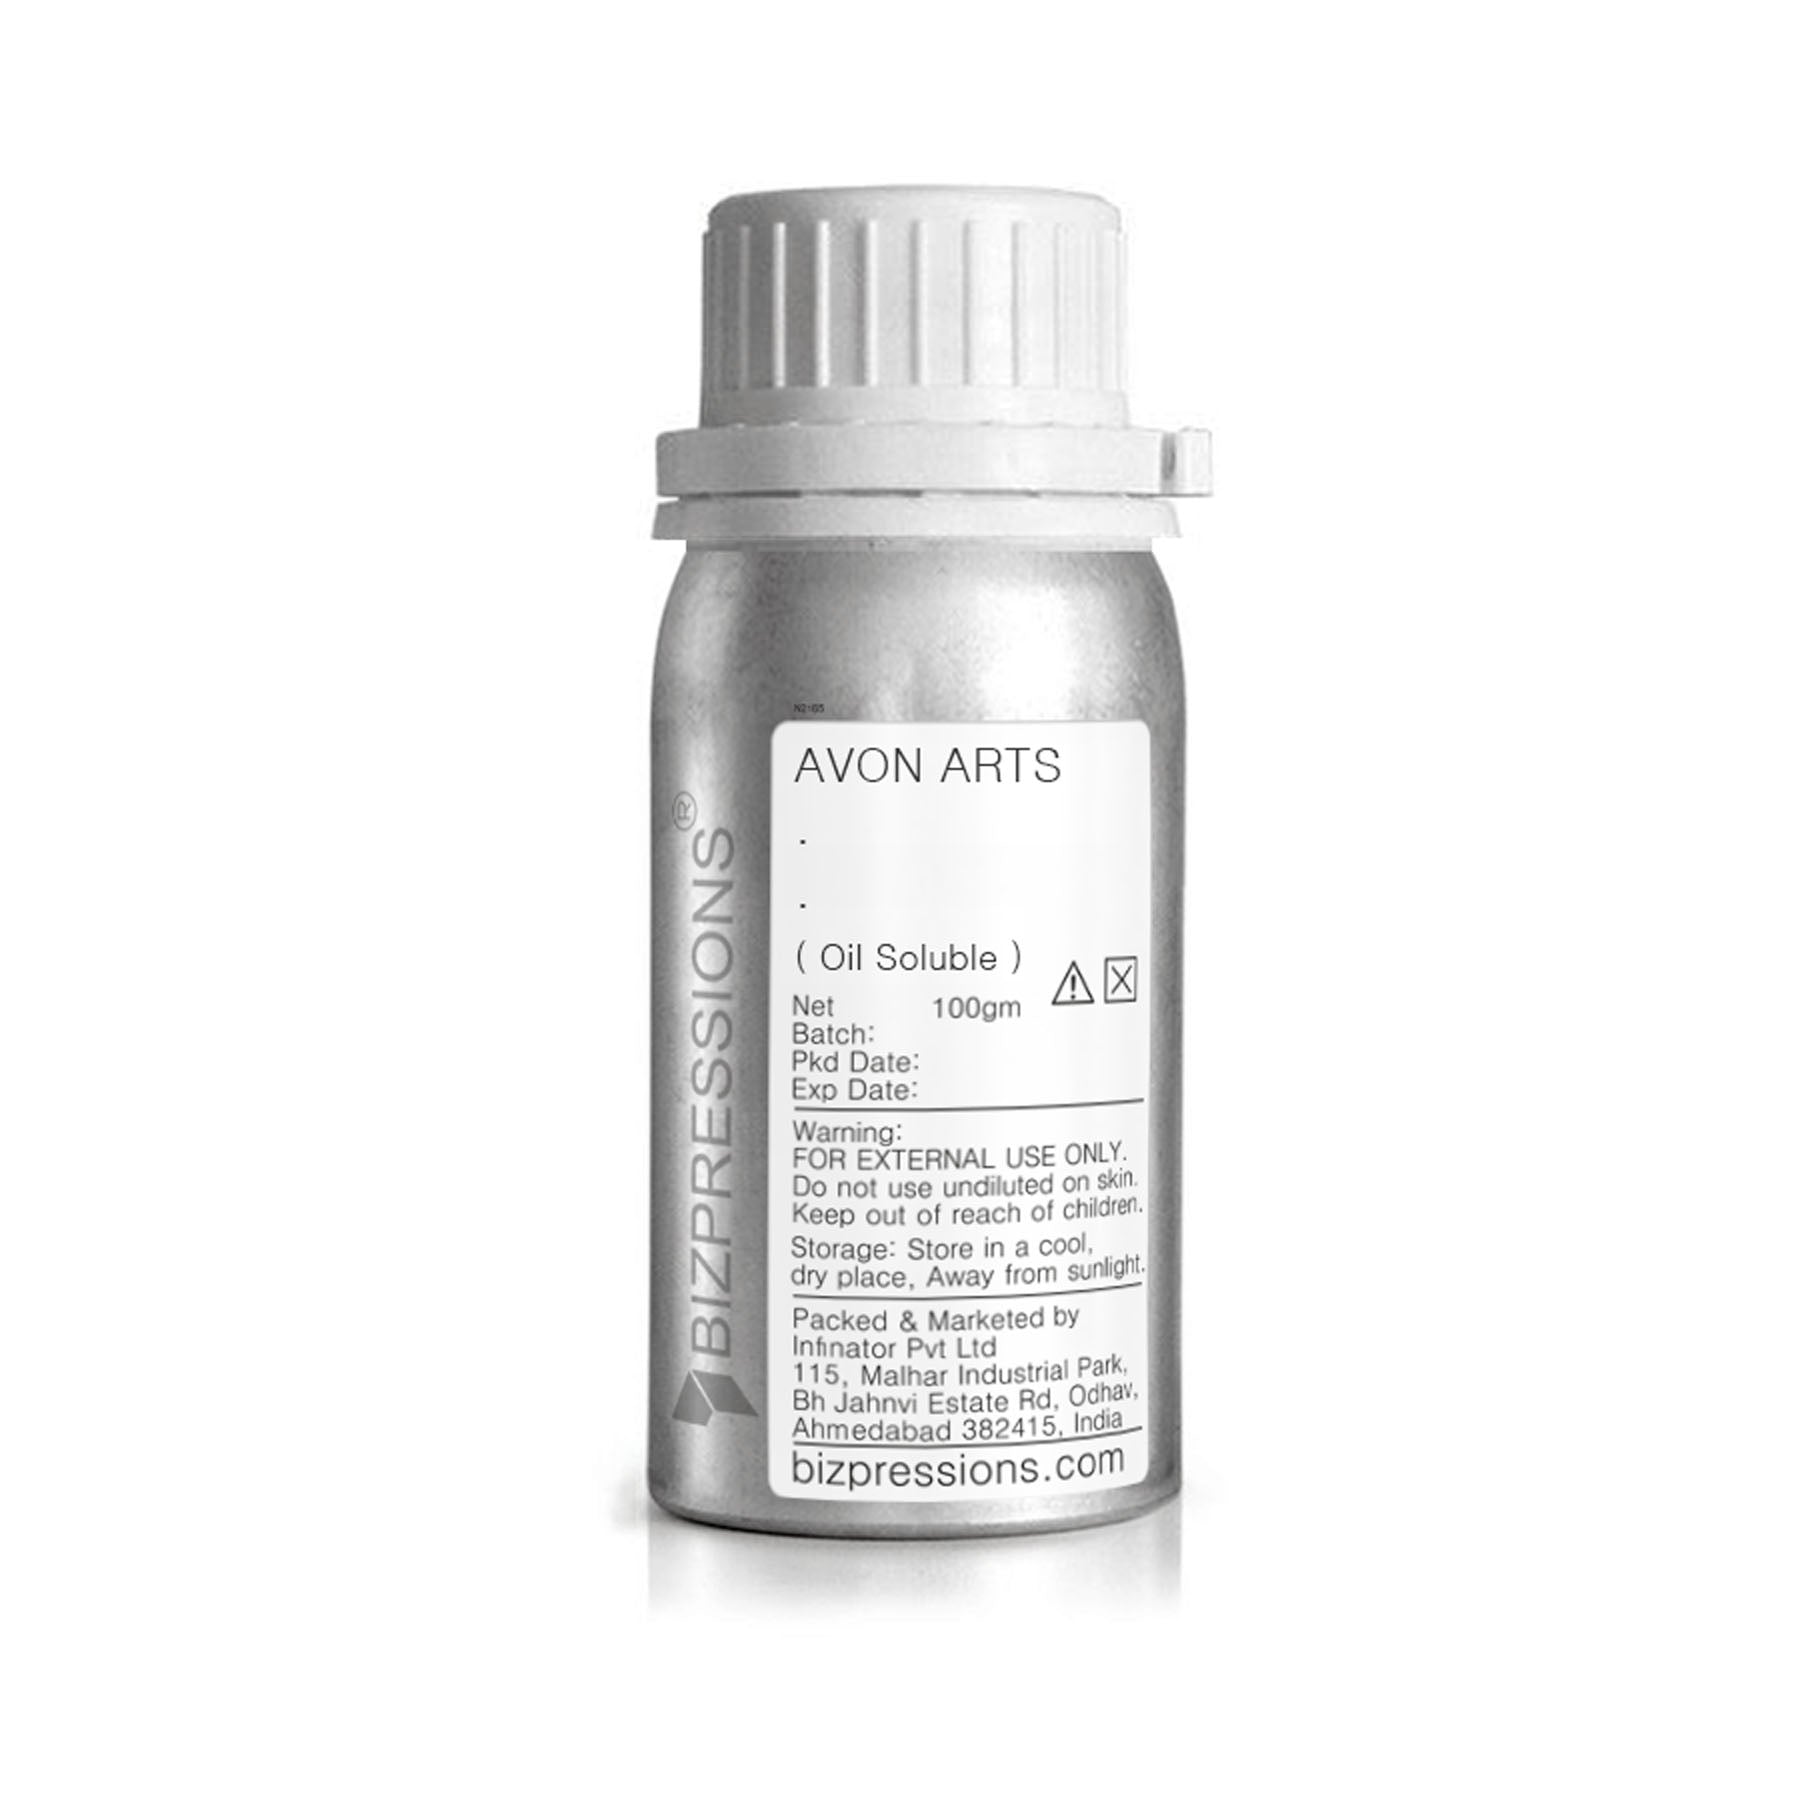 AVON ARTS - Fragrance ( Oil Soluble ) - 100 gm